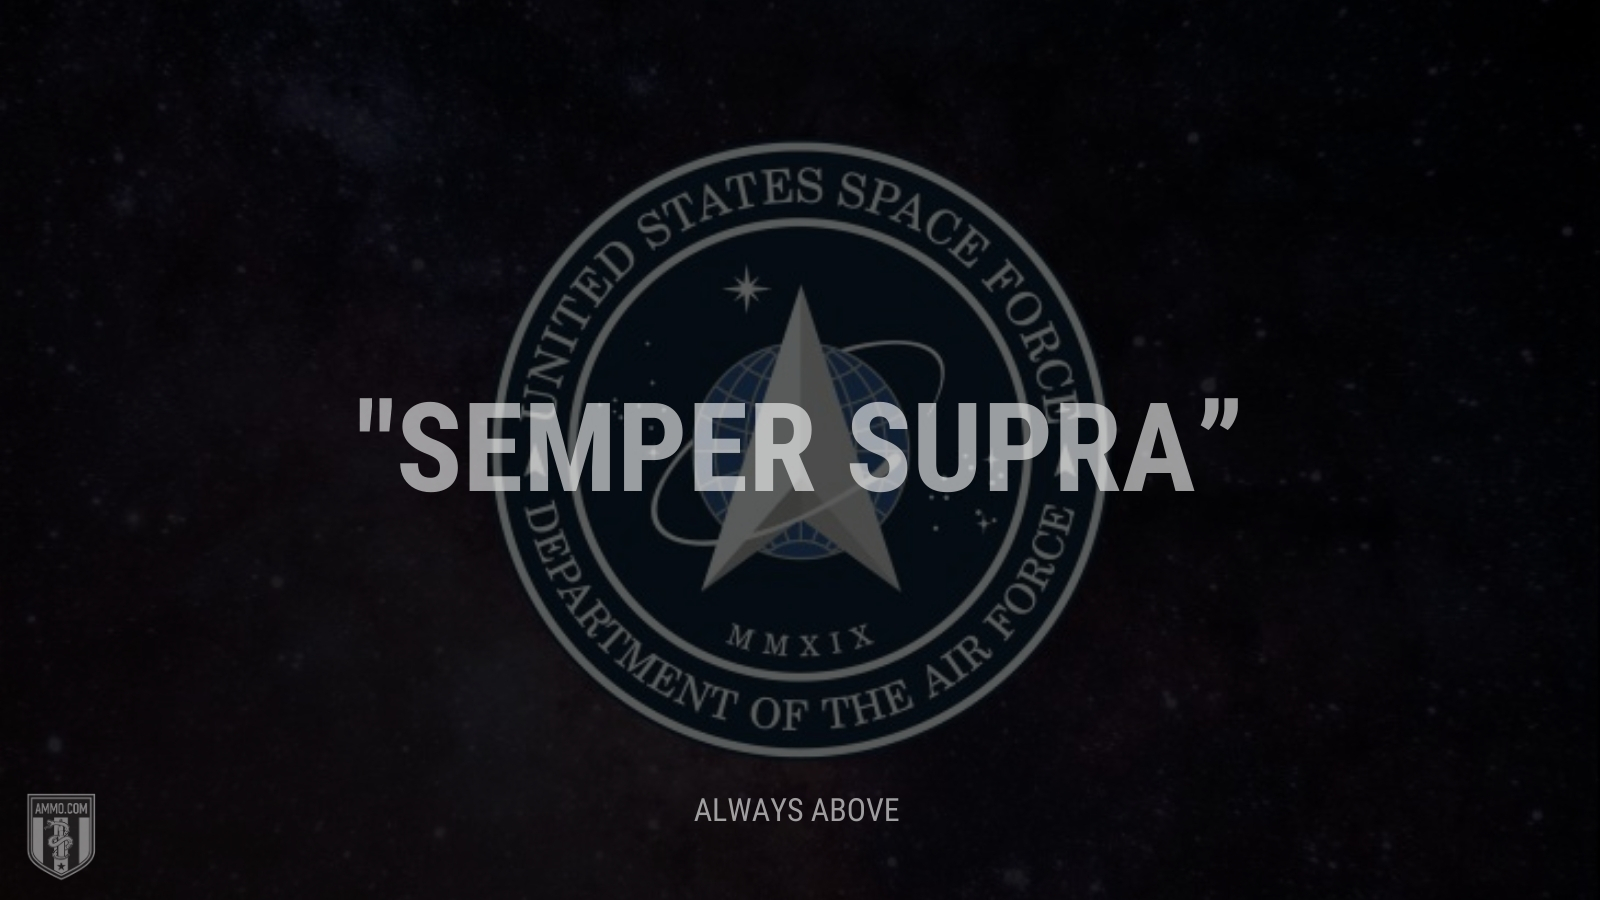 “Semper supra” - Always above